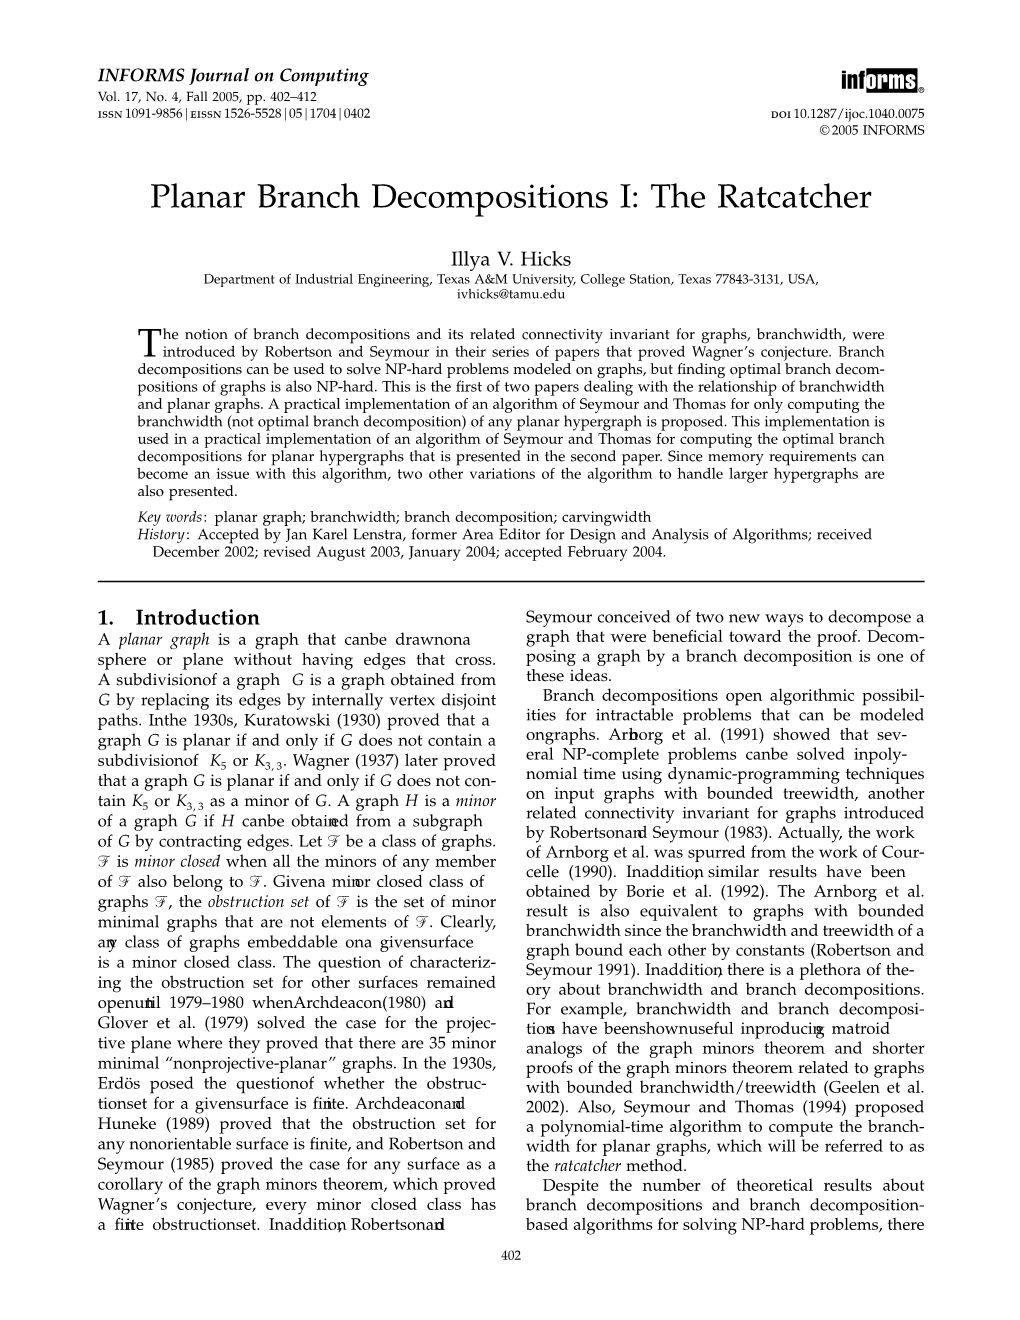 Planar Branch Decompositions I: the Ratcatcher